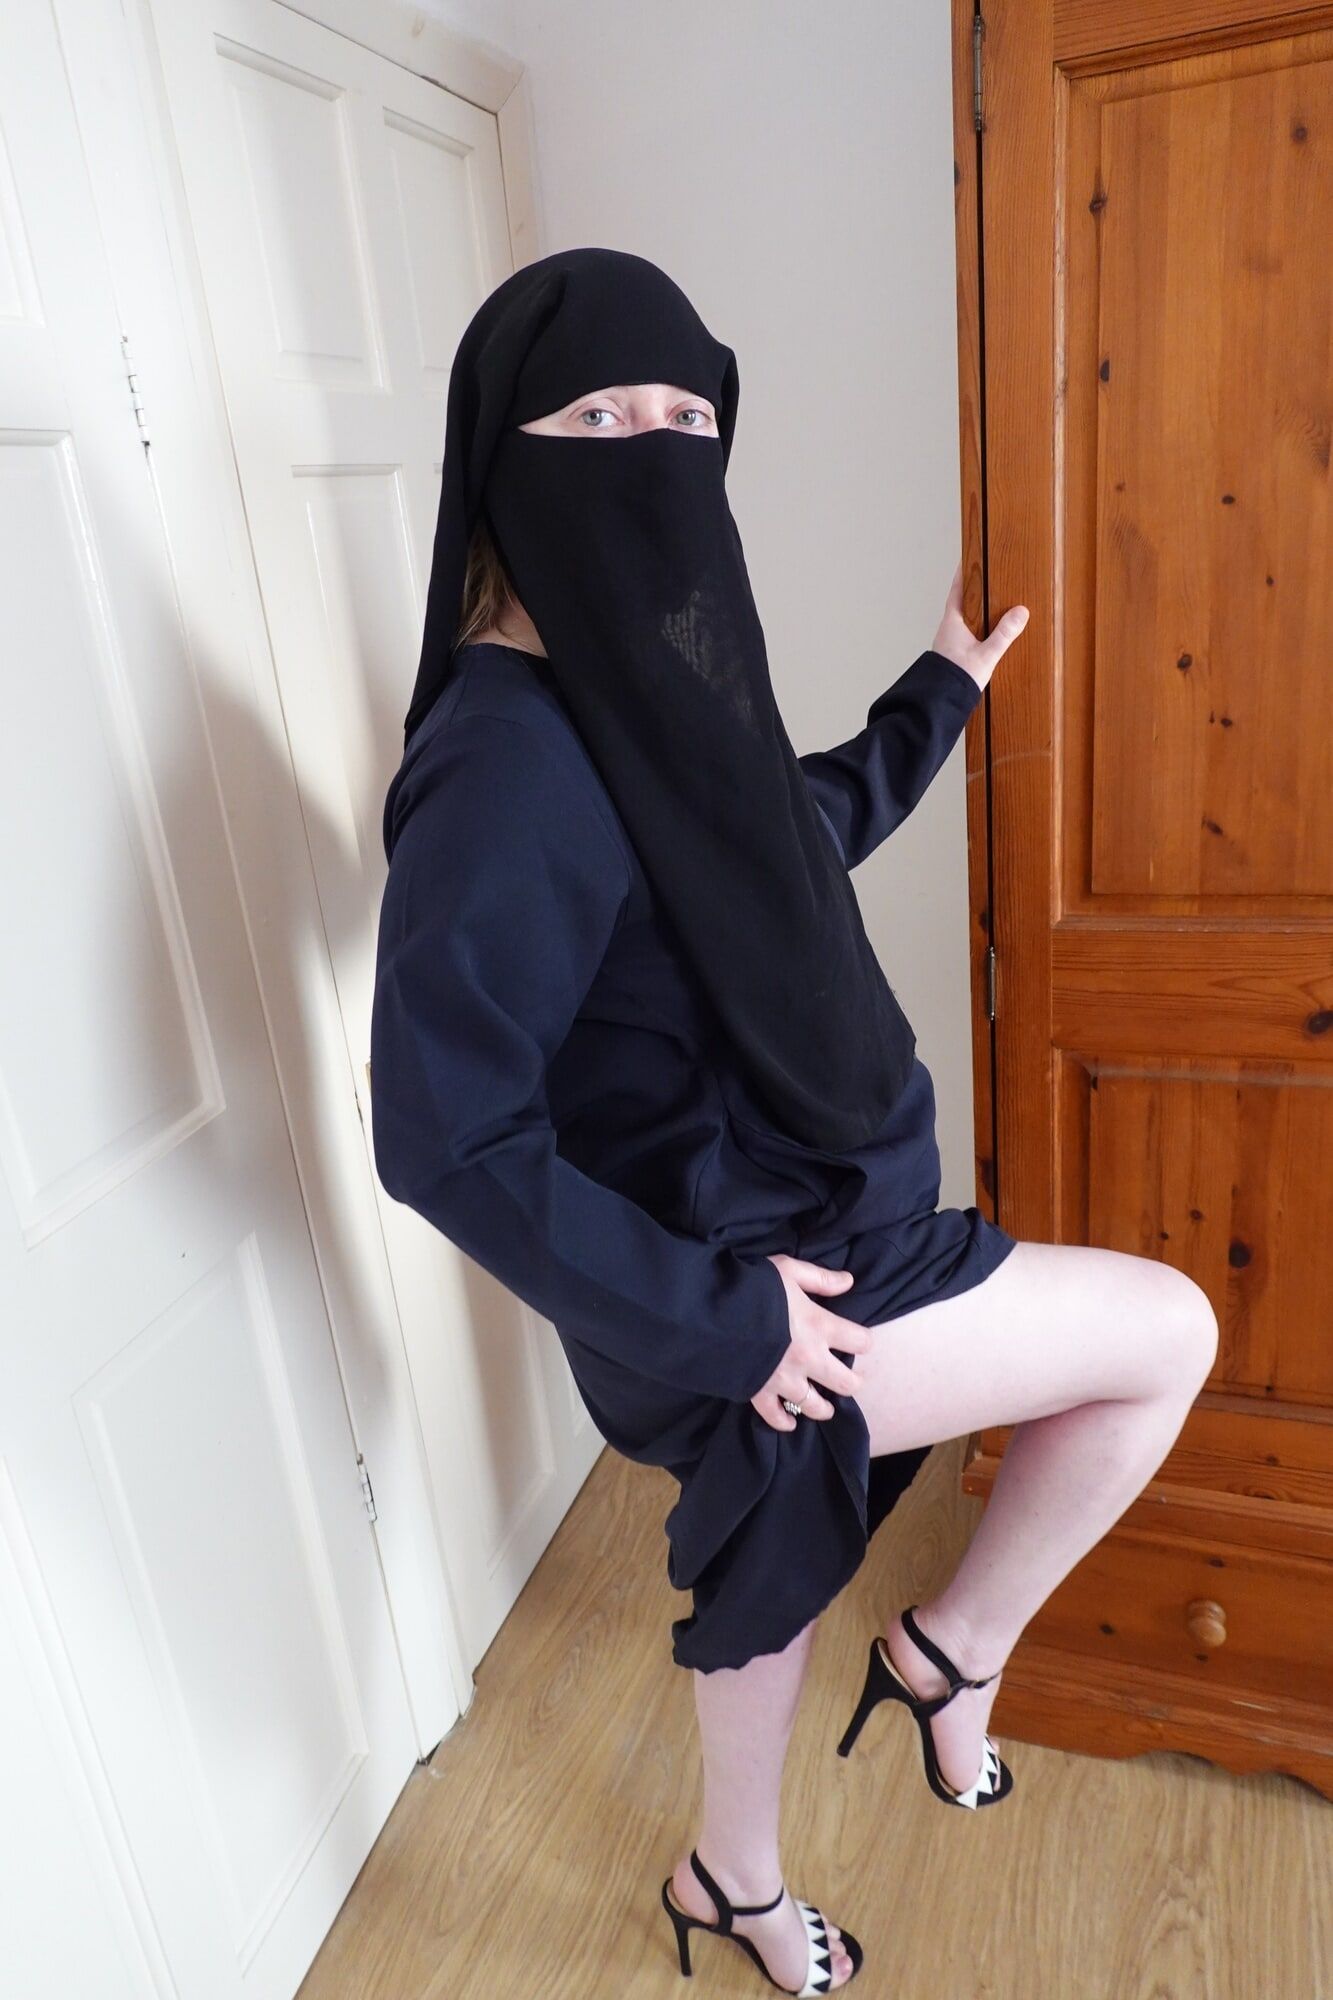 Pale Skin MILF in Burqa and Niqab and High heels #10